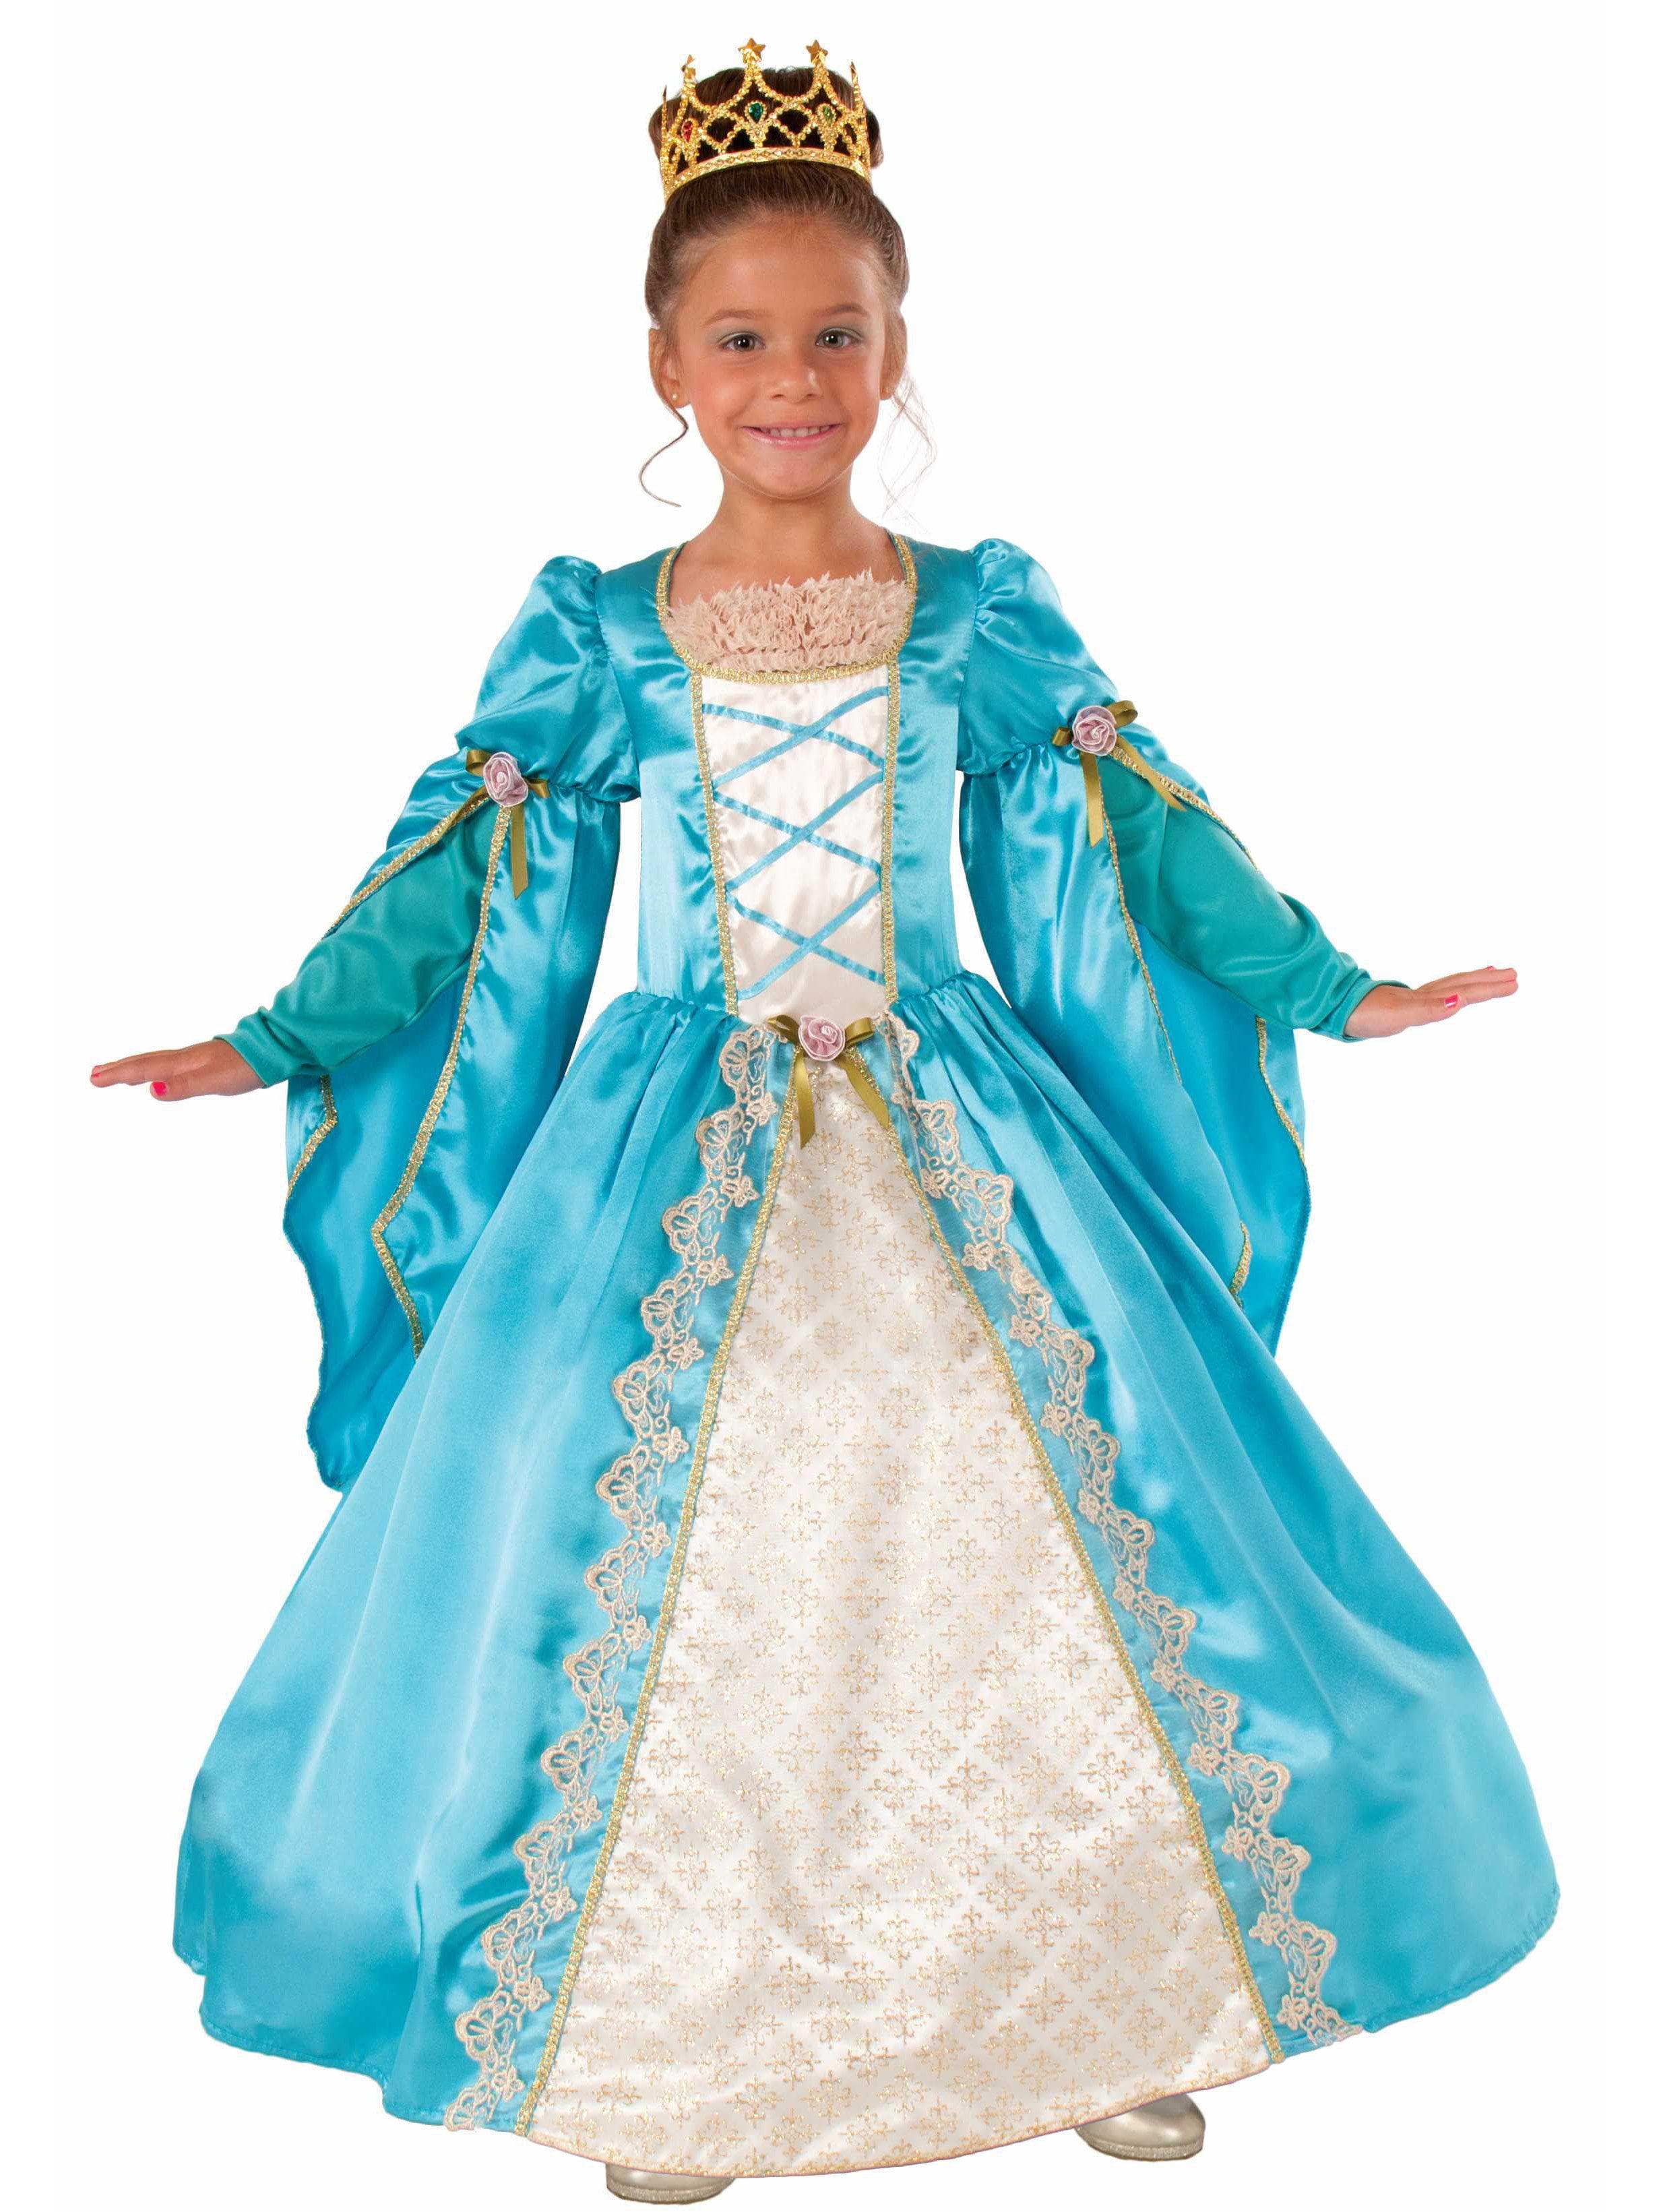 Kid's Renaissance Queen Costume - costumes.com